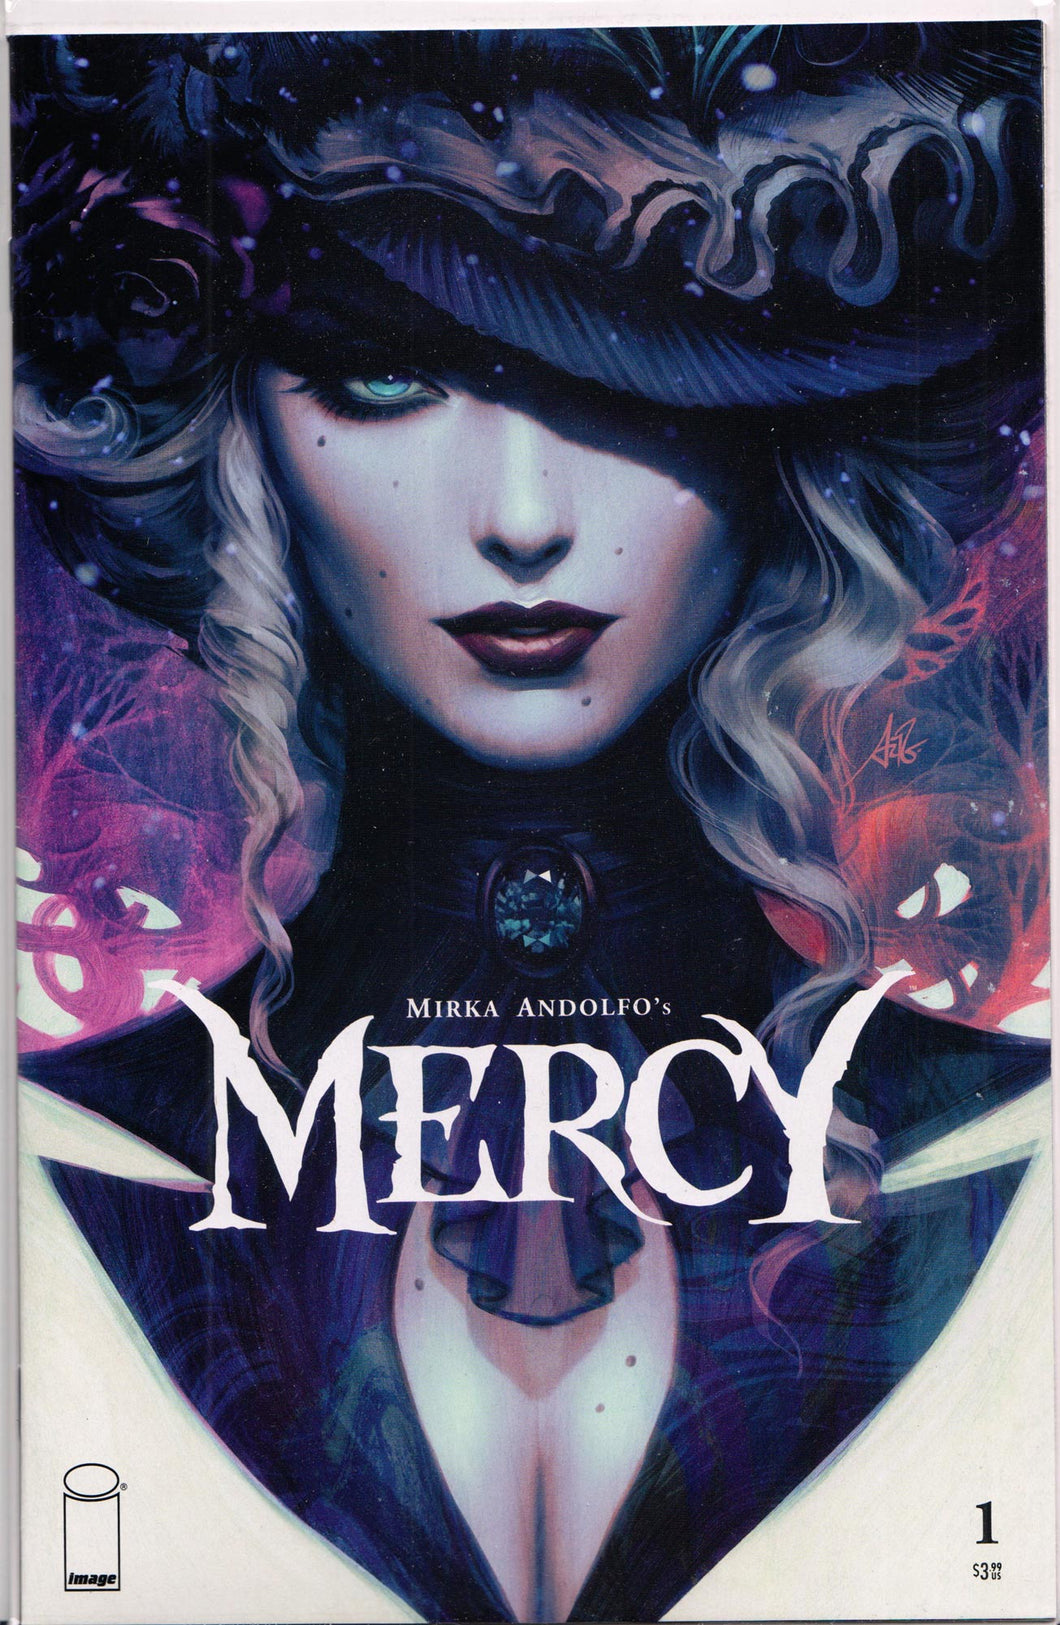 MERCY #1 by MIRKA ANDOLFO (STANLEY 